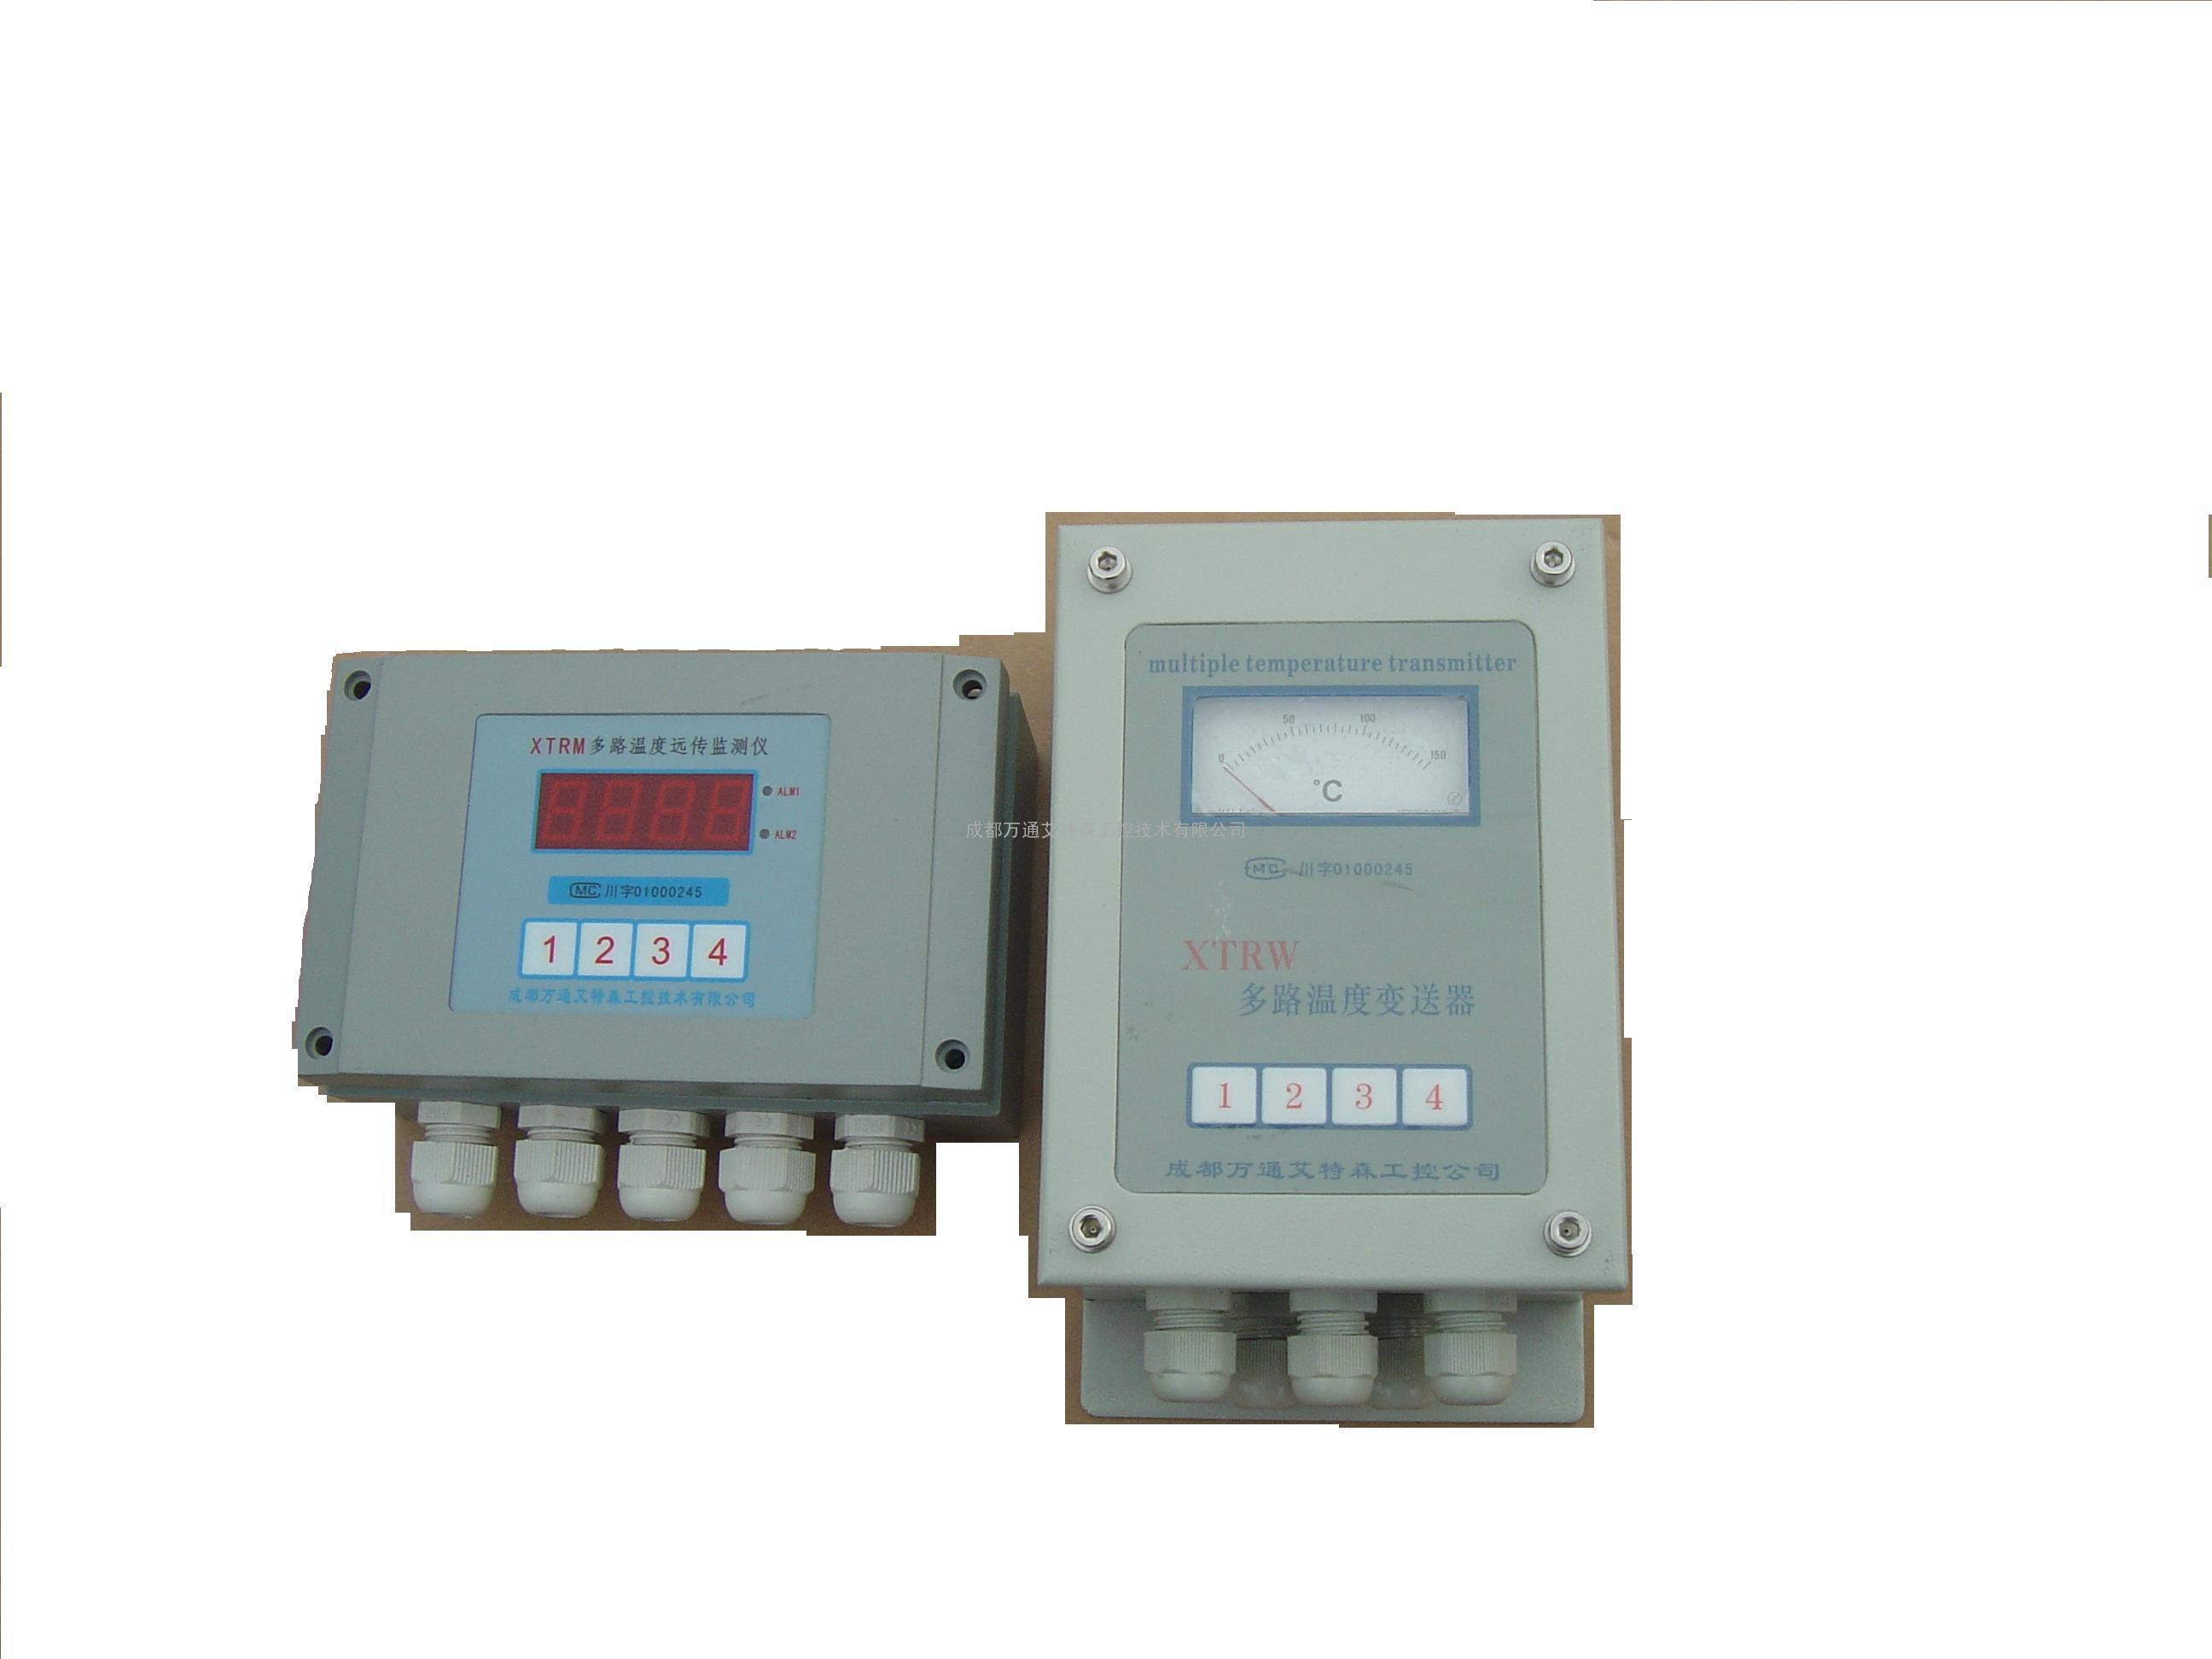 XTRW多路温度变送器XTRW-4215多路温度监测仪